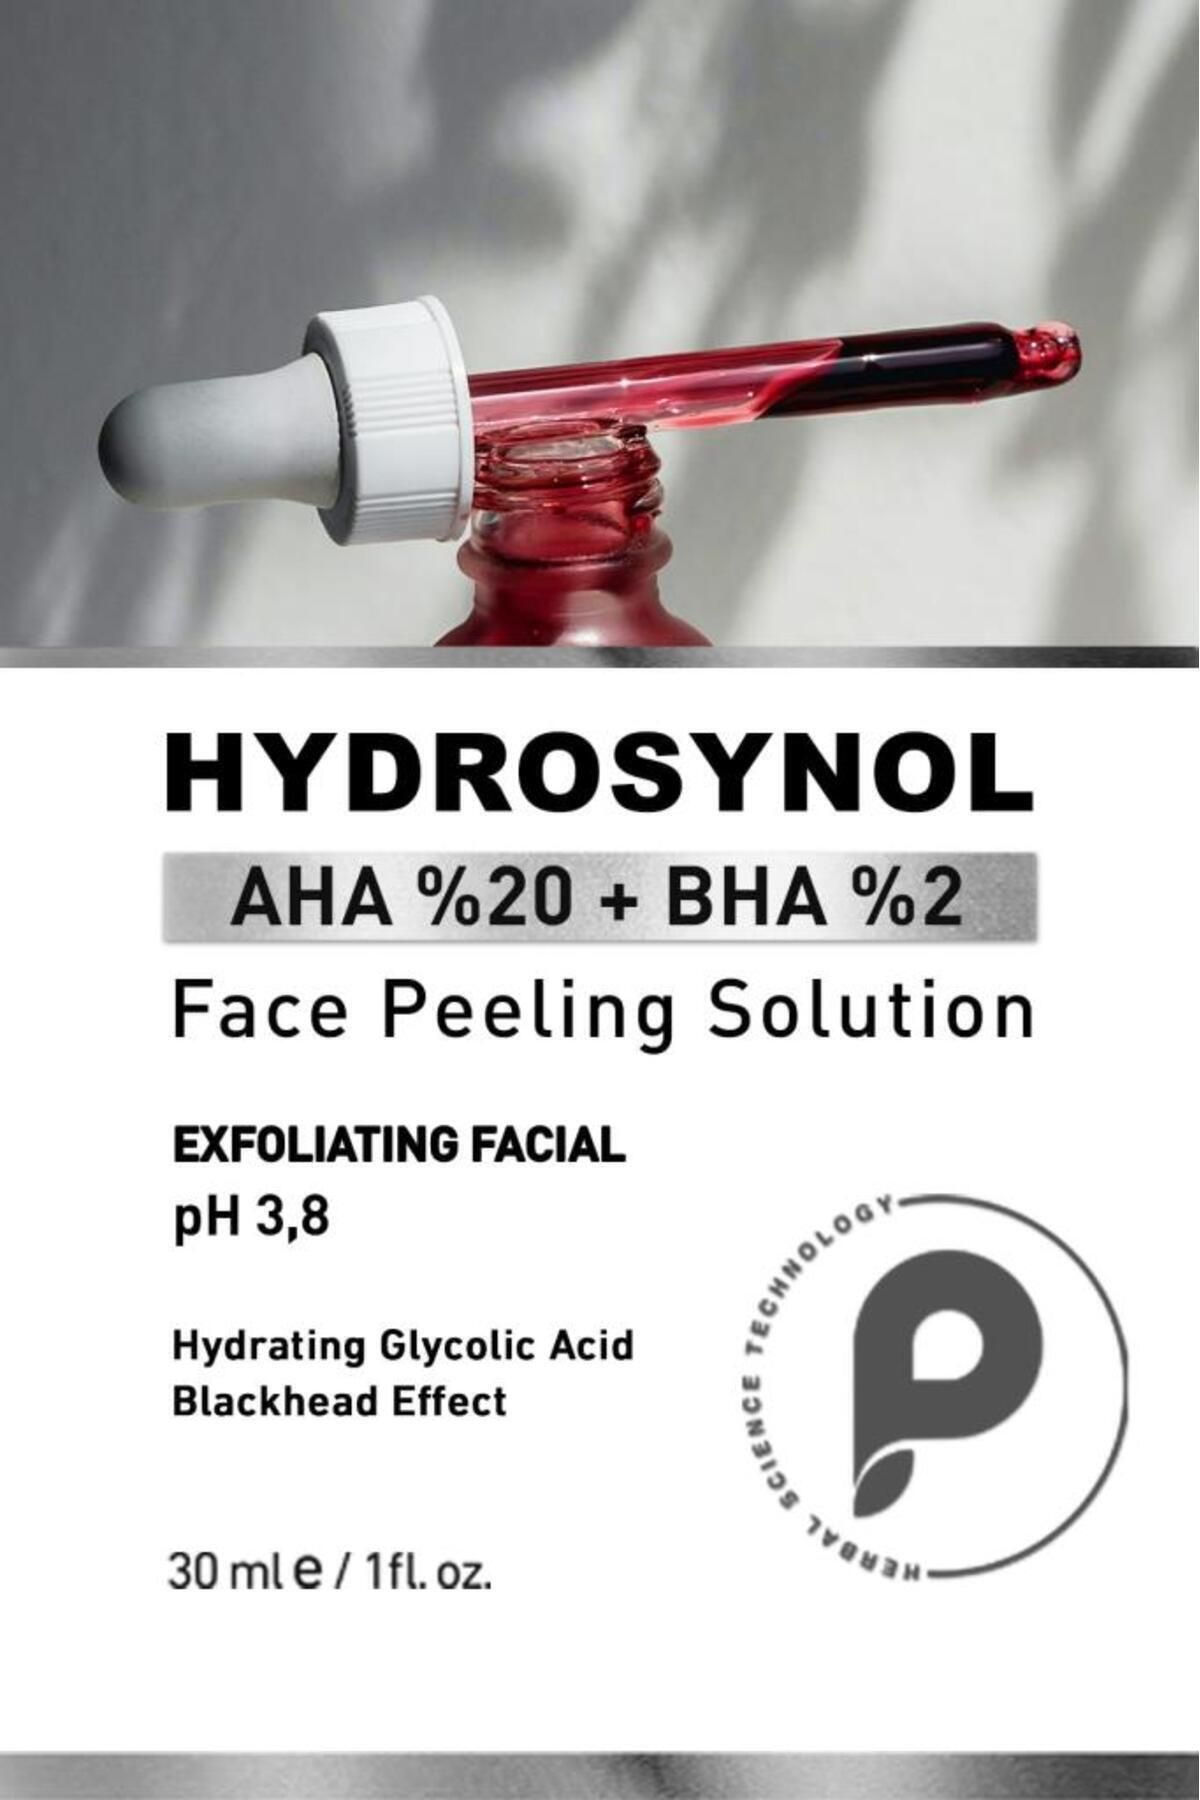 PROCSIN محصول تسریع‌کننده تونال هیدروسینول با ۲۰٪ AHA و ۲٪ BHA سرم پیلینگ ۳۰ میلی‌لیتر